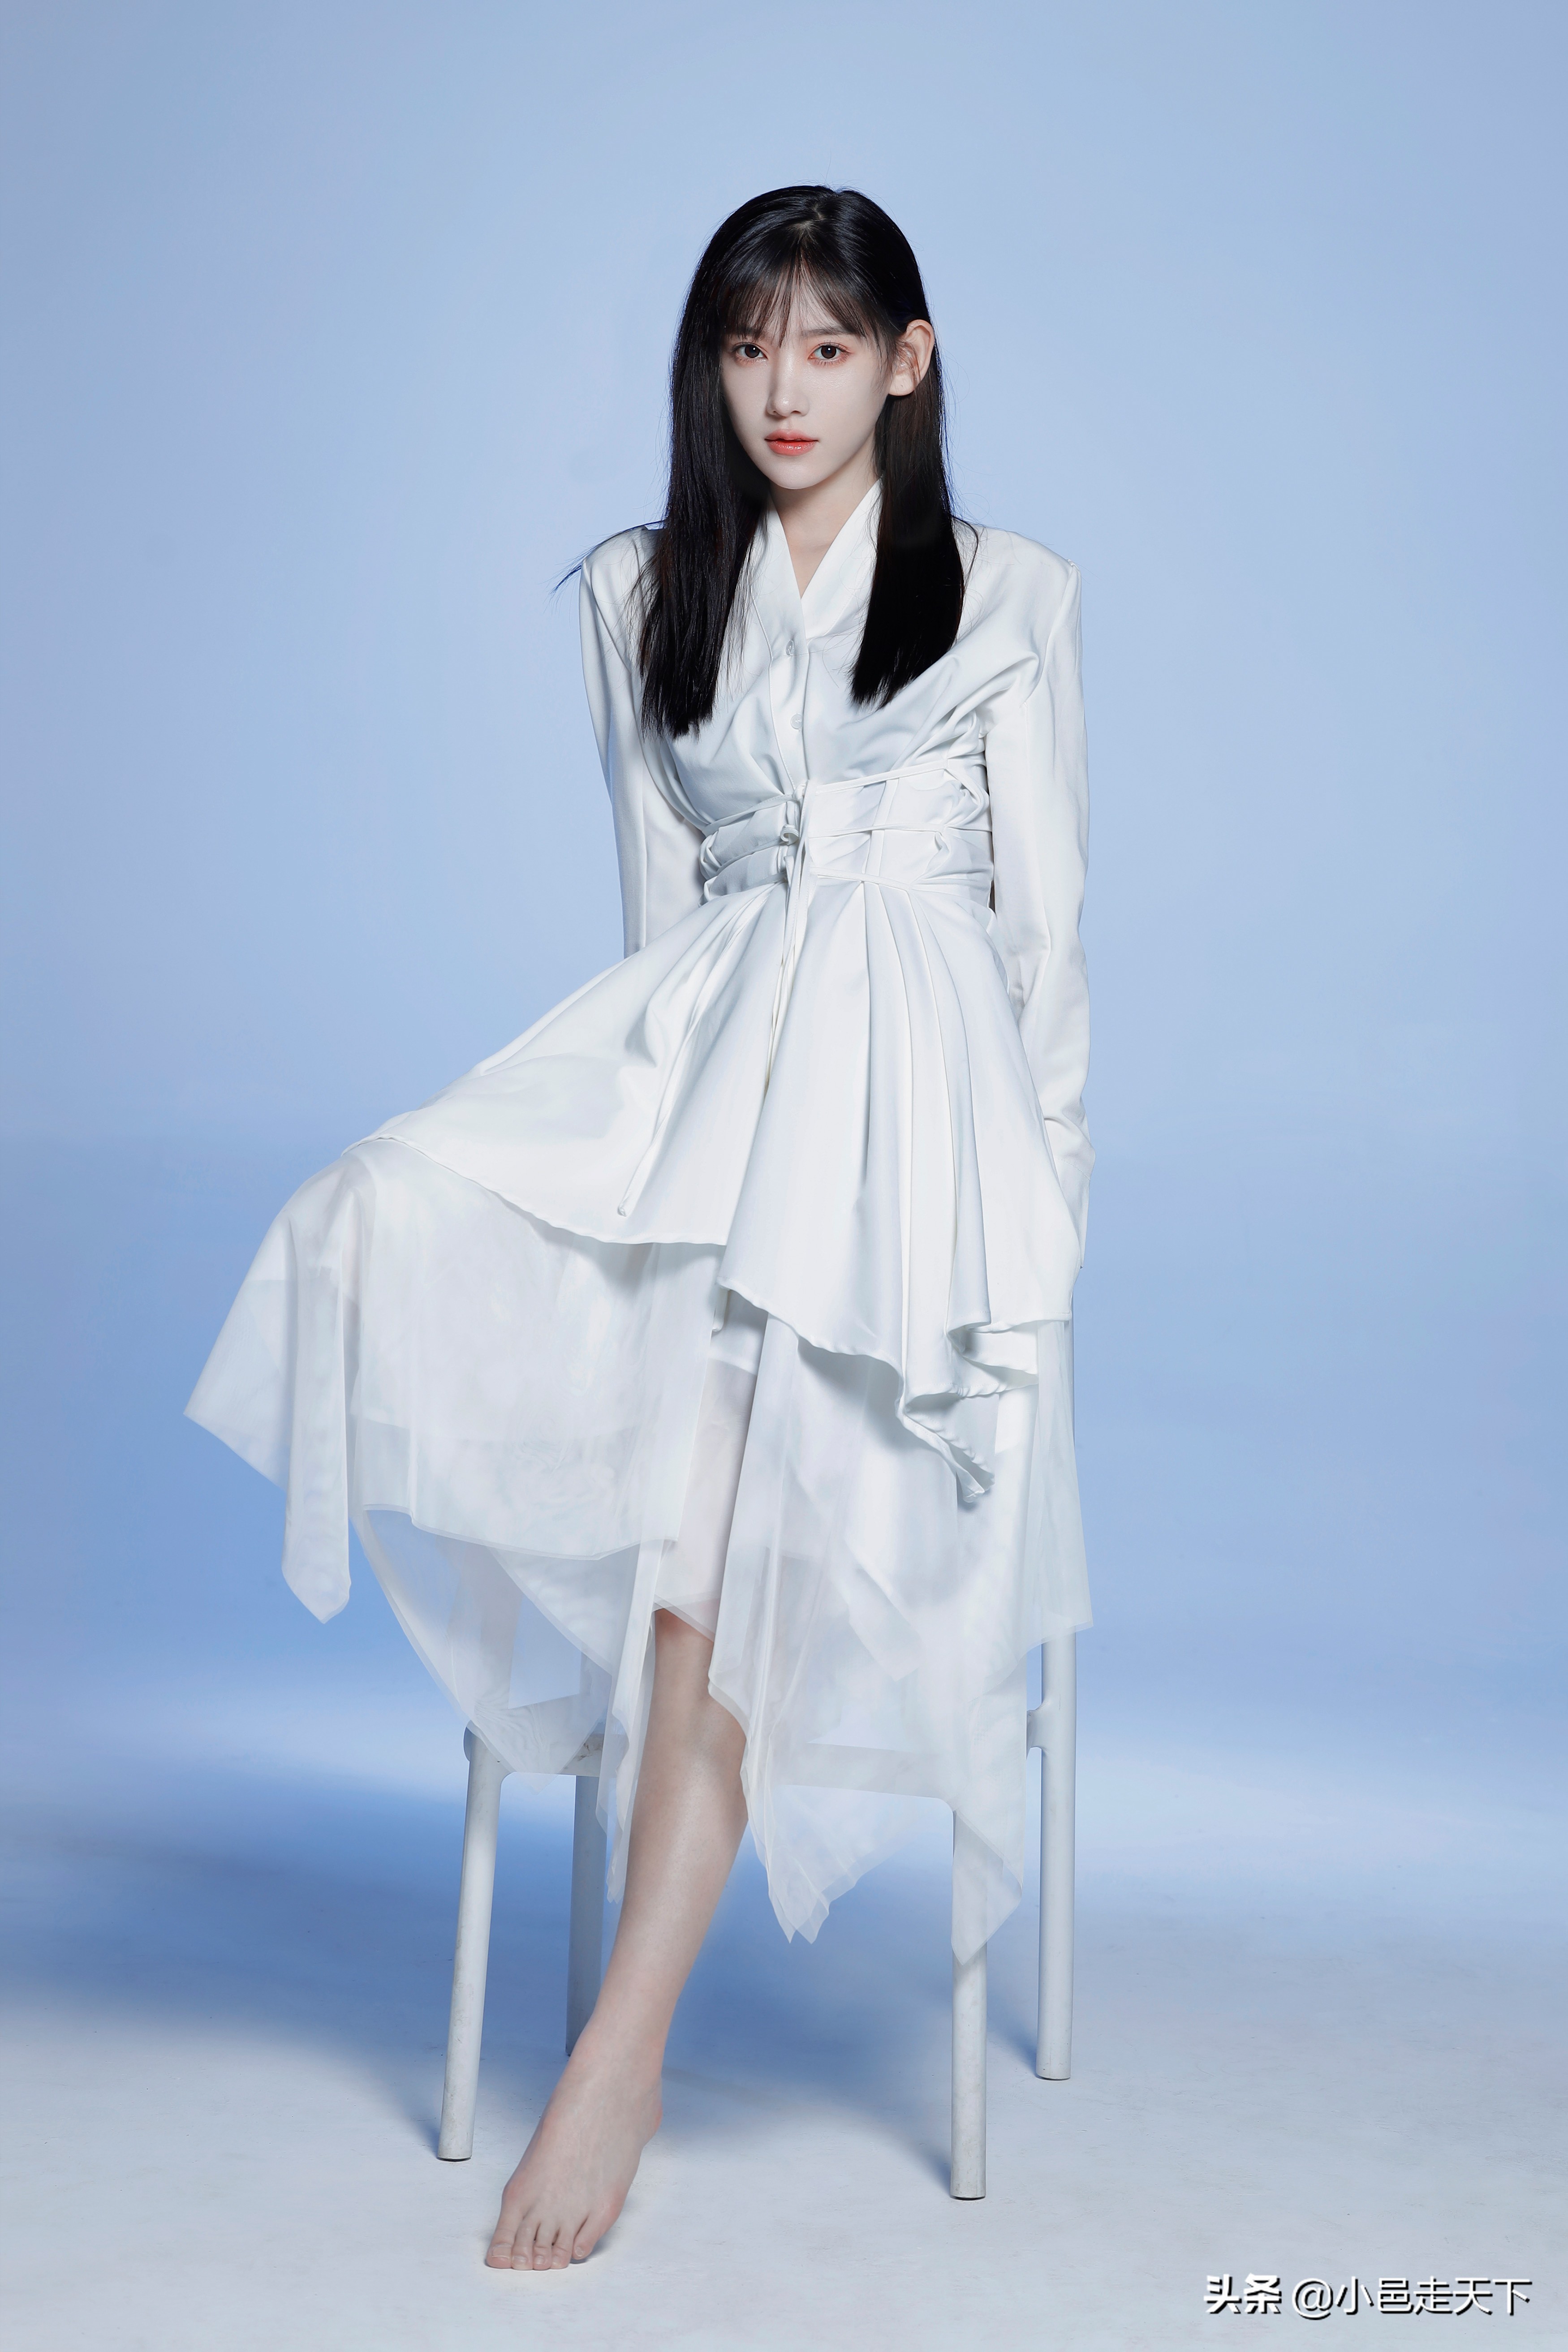 Li Muchen white dress with long hair photo - iNEWS